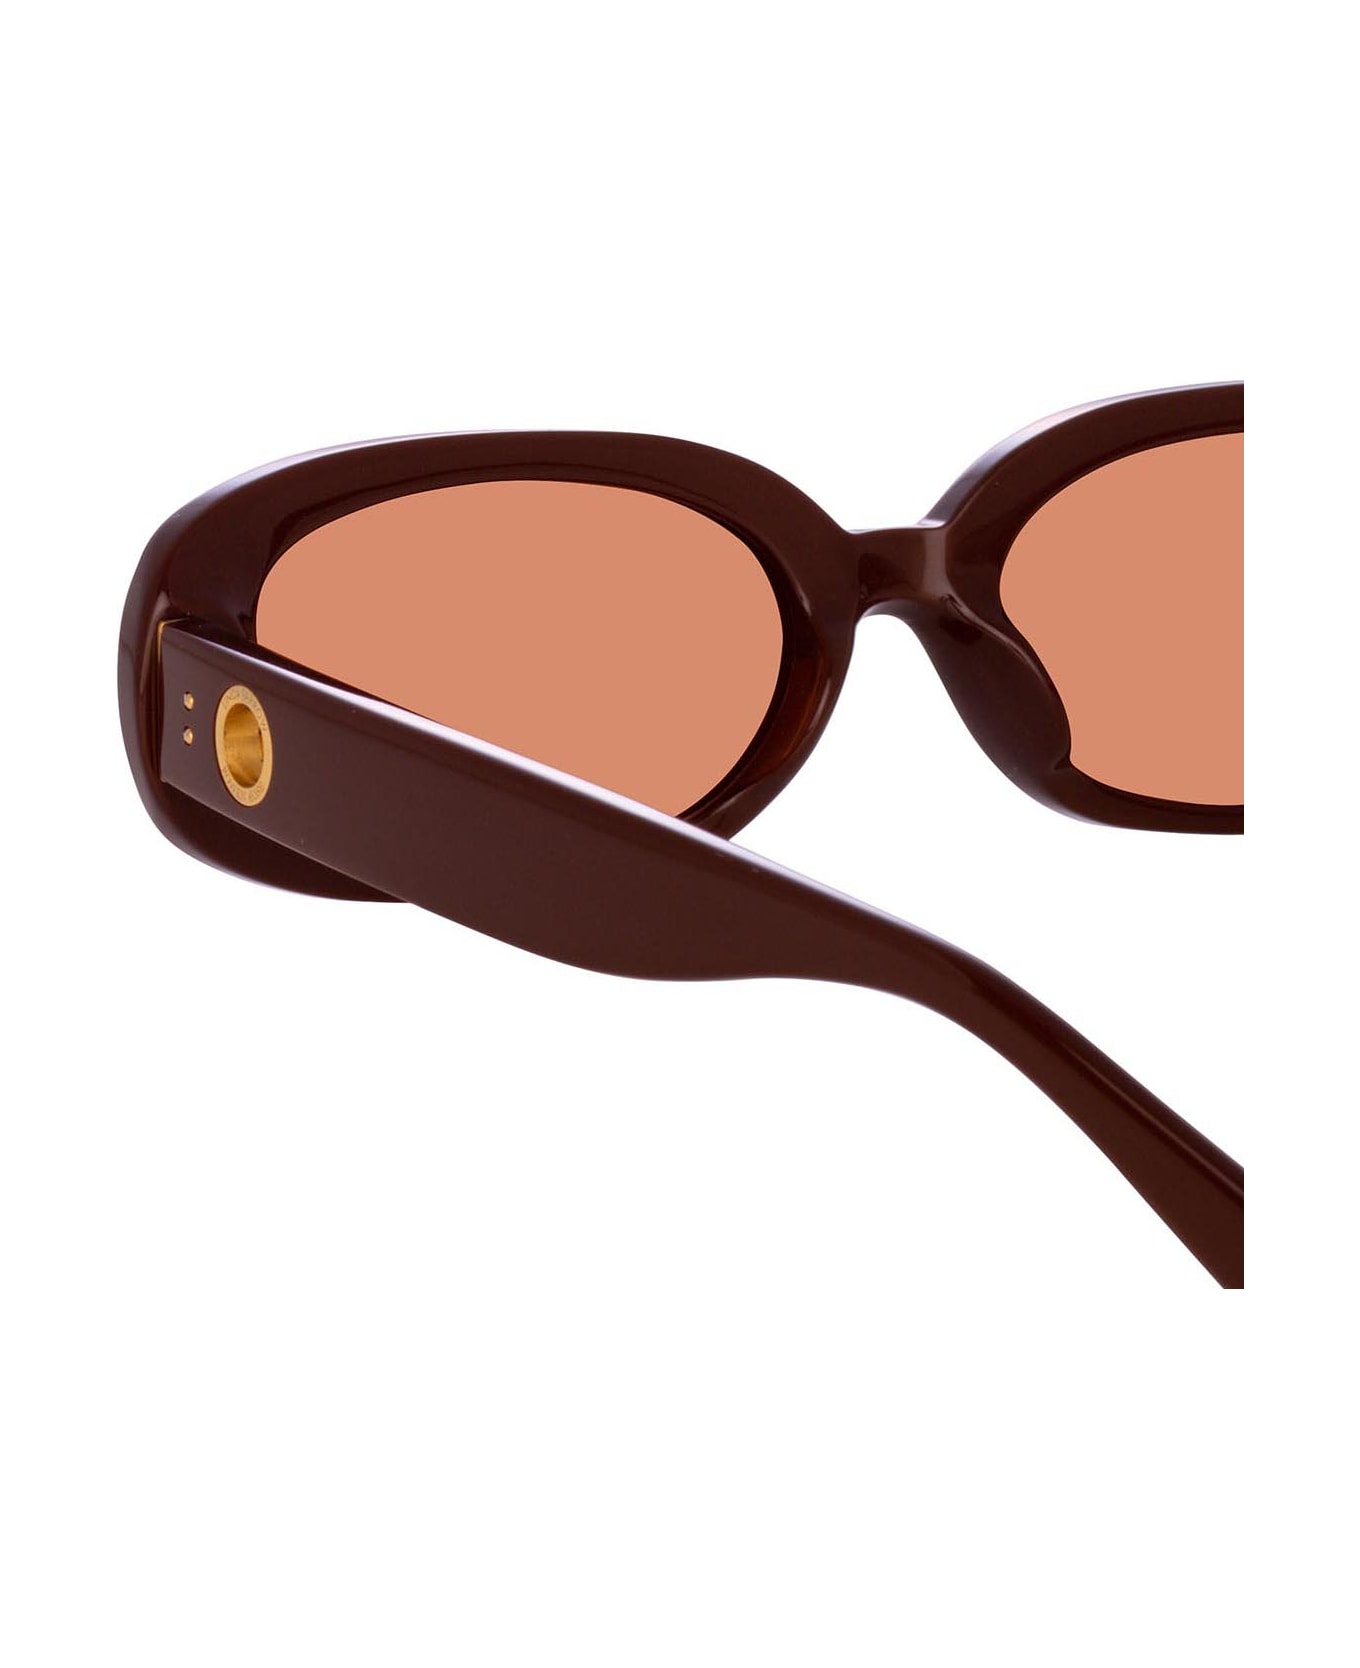 Linda Farrow Lfl1252 Brown / Light Gold Sunglasses - Brown / Light Gold